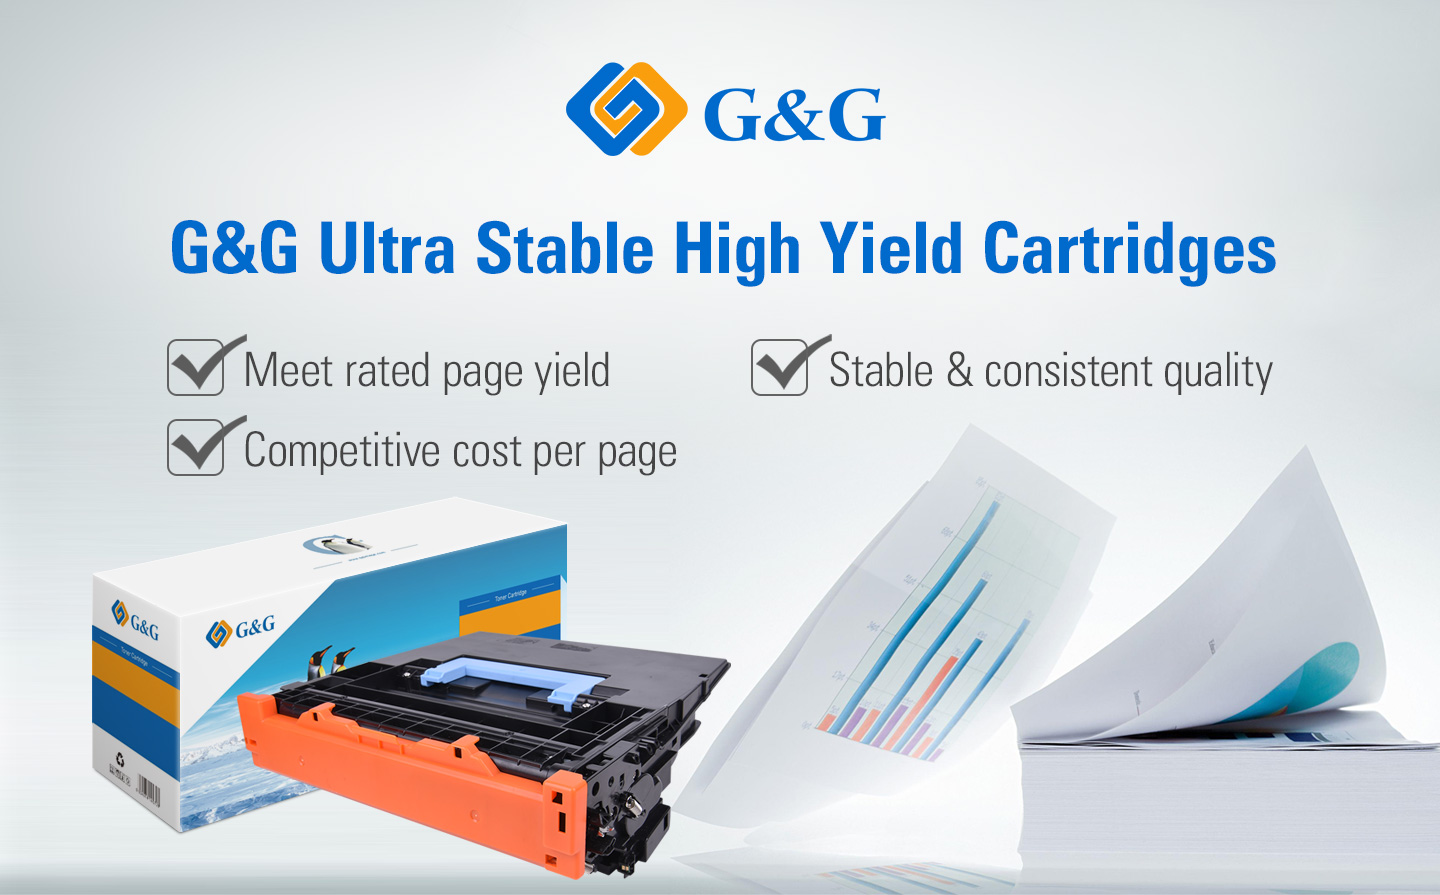 G&G ultra stable high yield cartridge